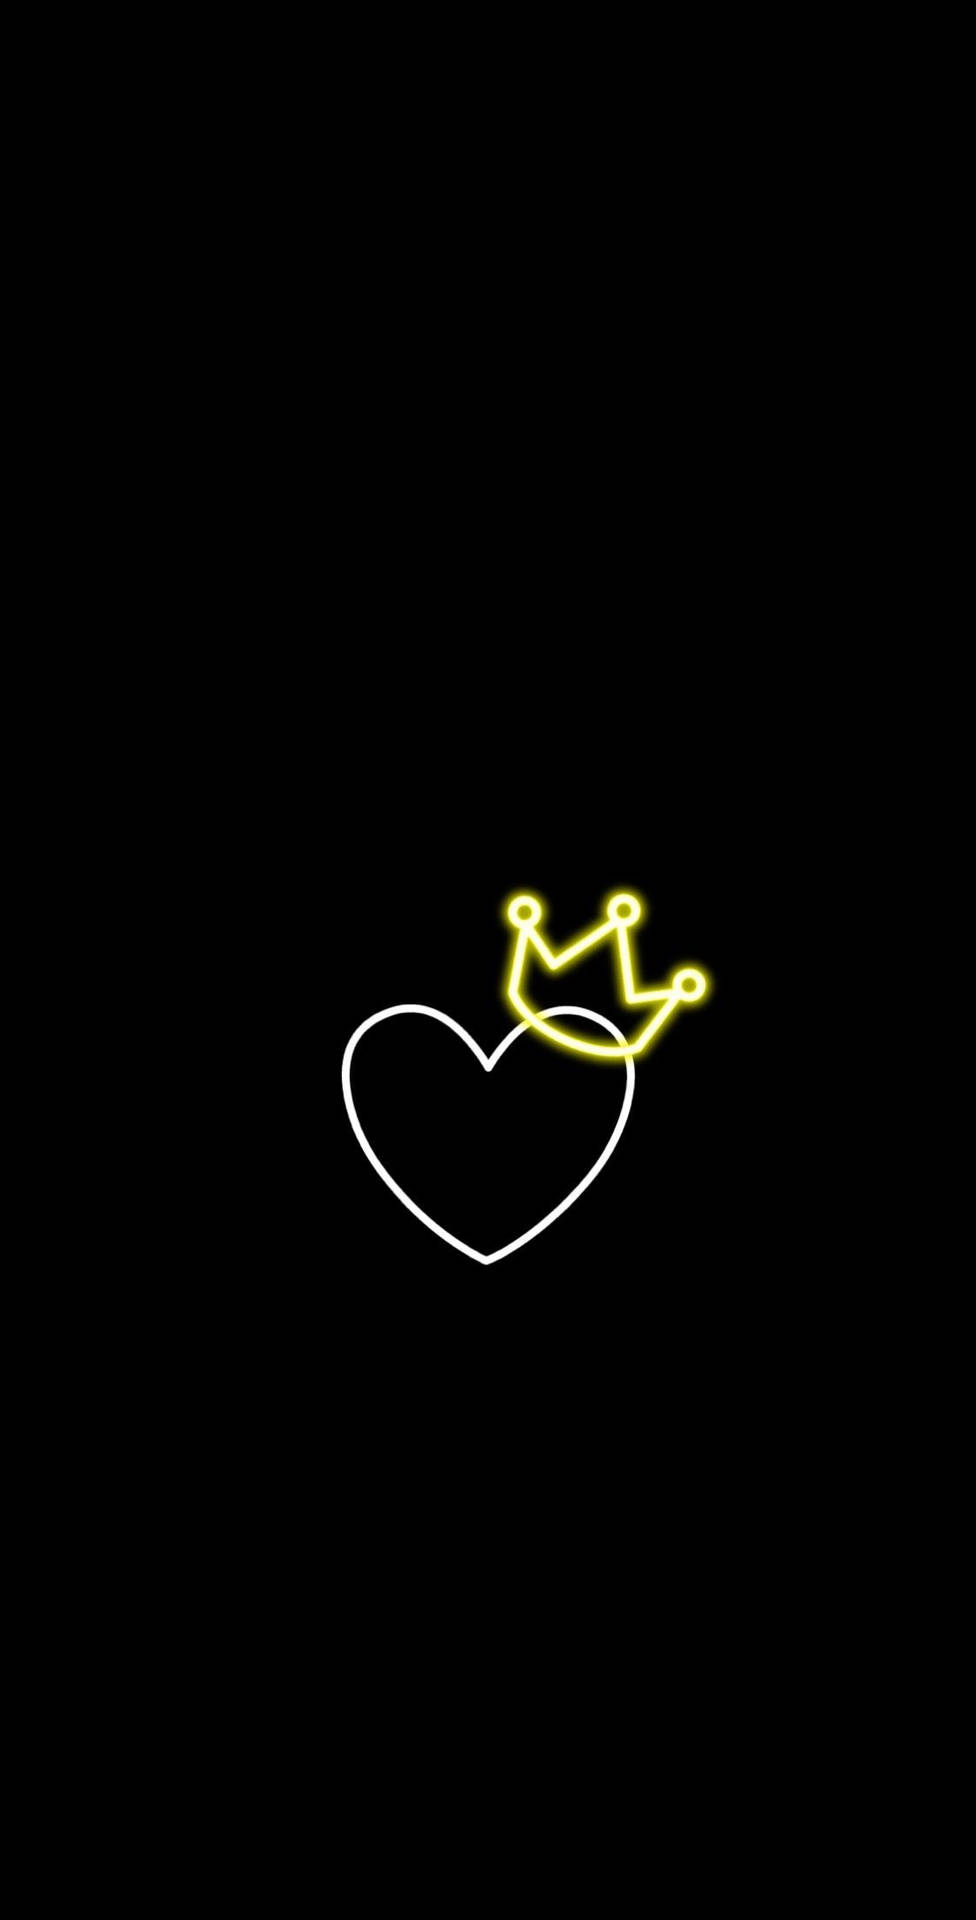 Dark Heart With Yellow Crown Background